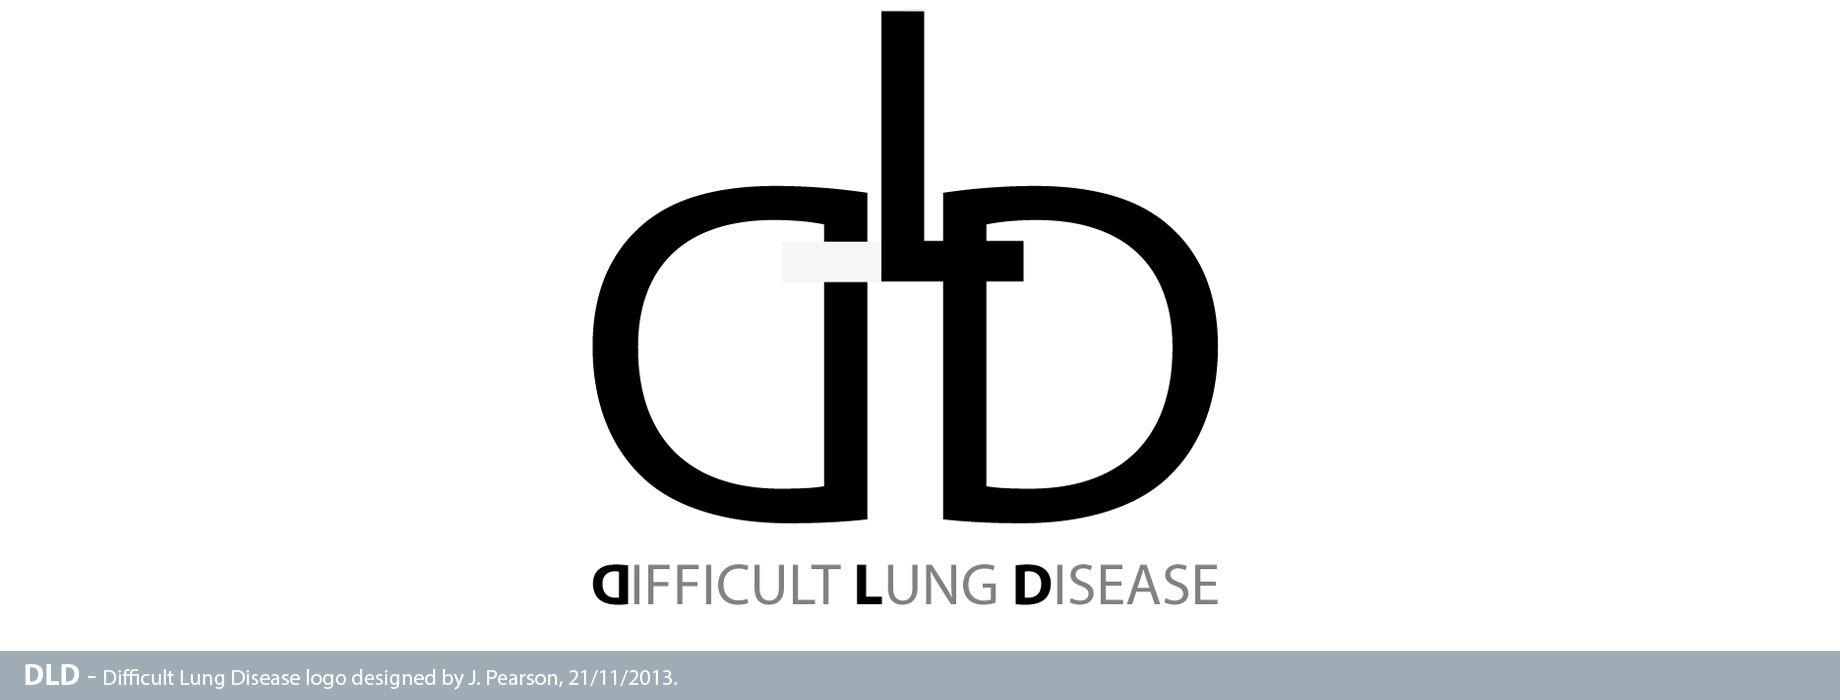 DLD Logo - DLD Logo. Difficult Lung Disease